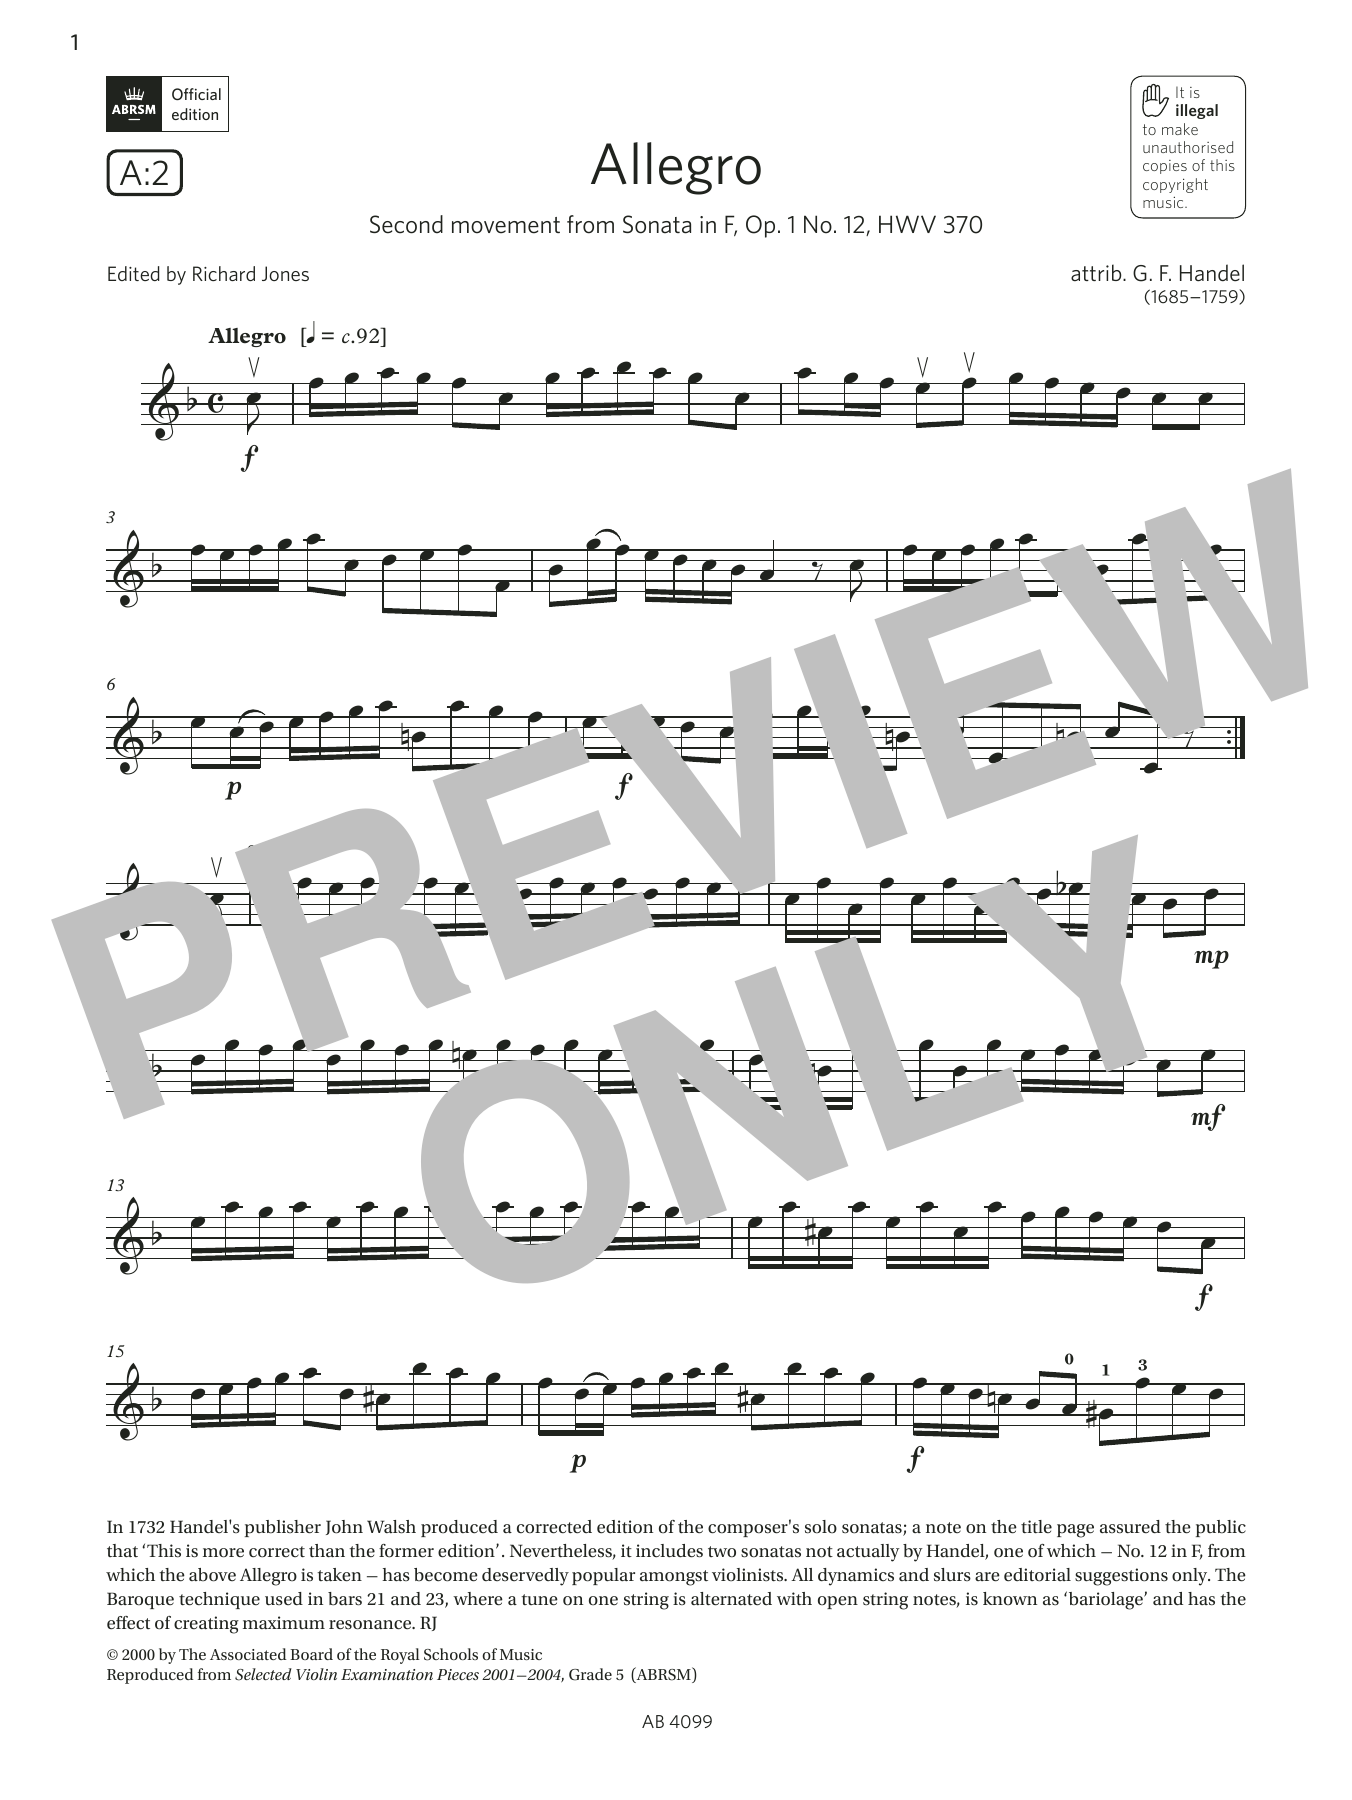 Download G. F. Handel Allegro (Grade 5, A2, from the ABRSM Vi Sheet Music